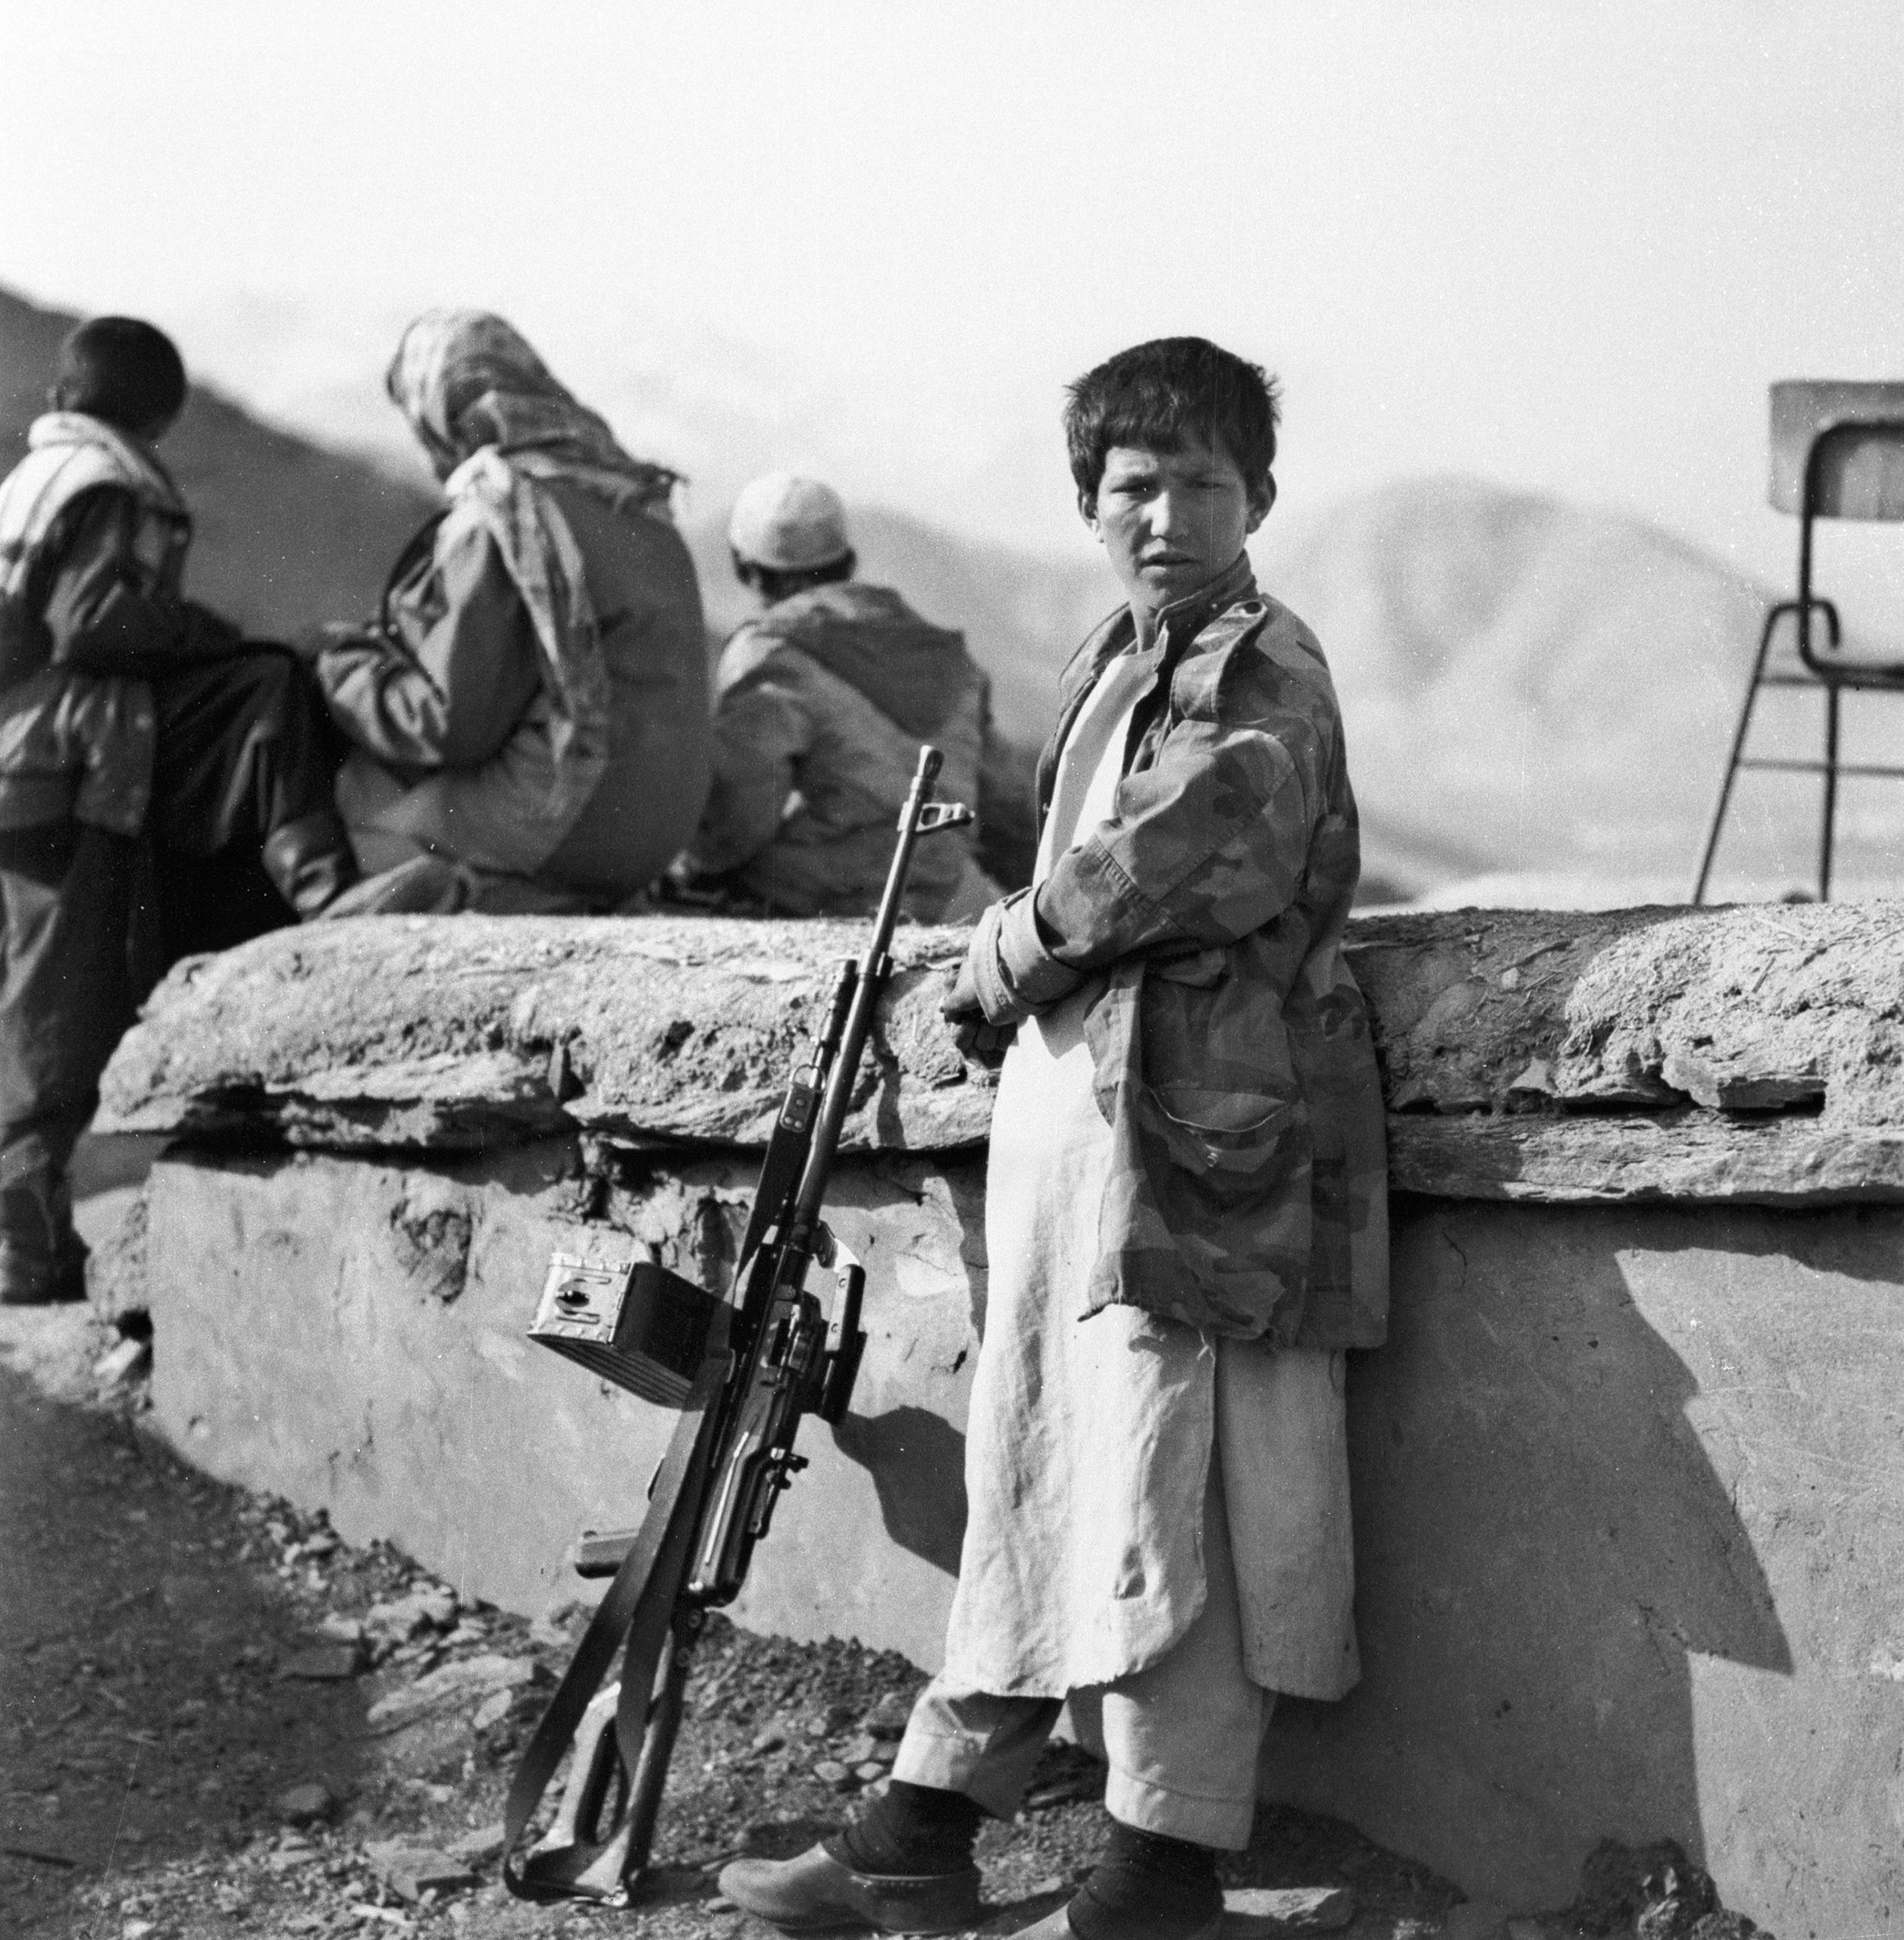 Un bambino soldato in Afghanistan, gennaio 1995.